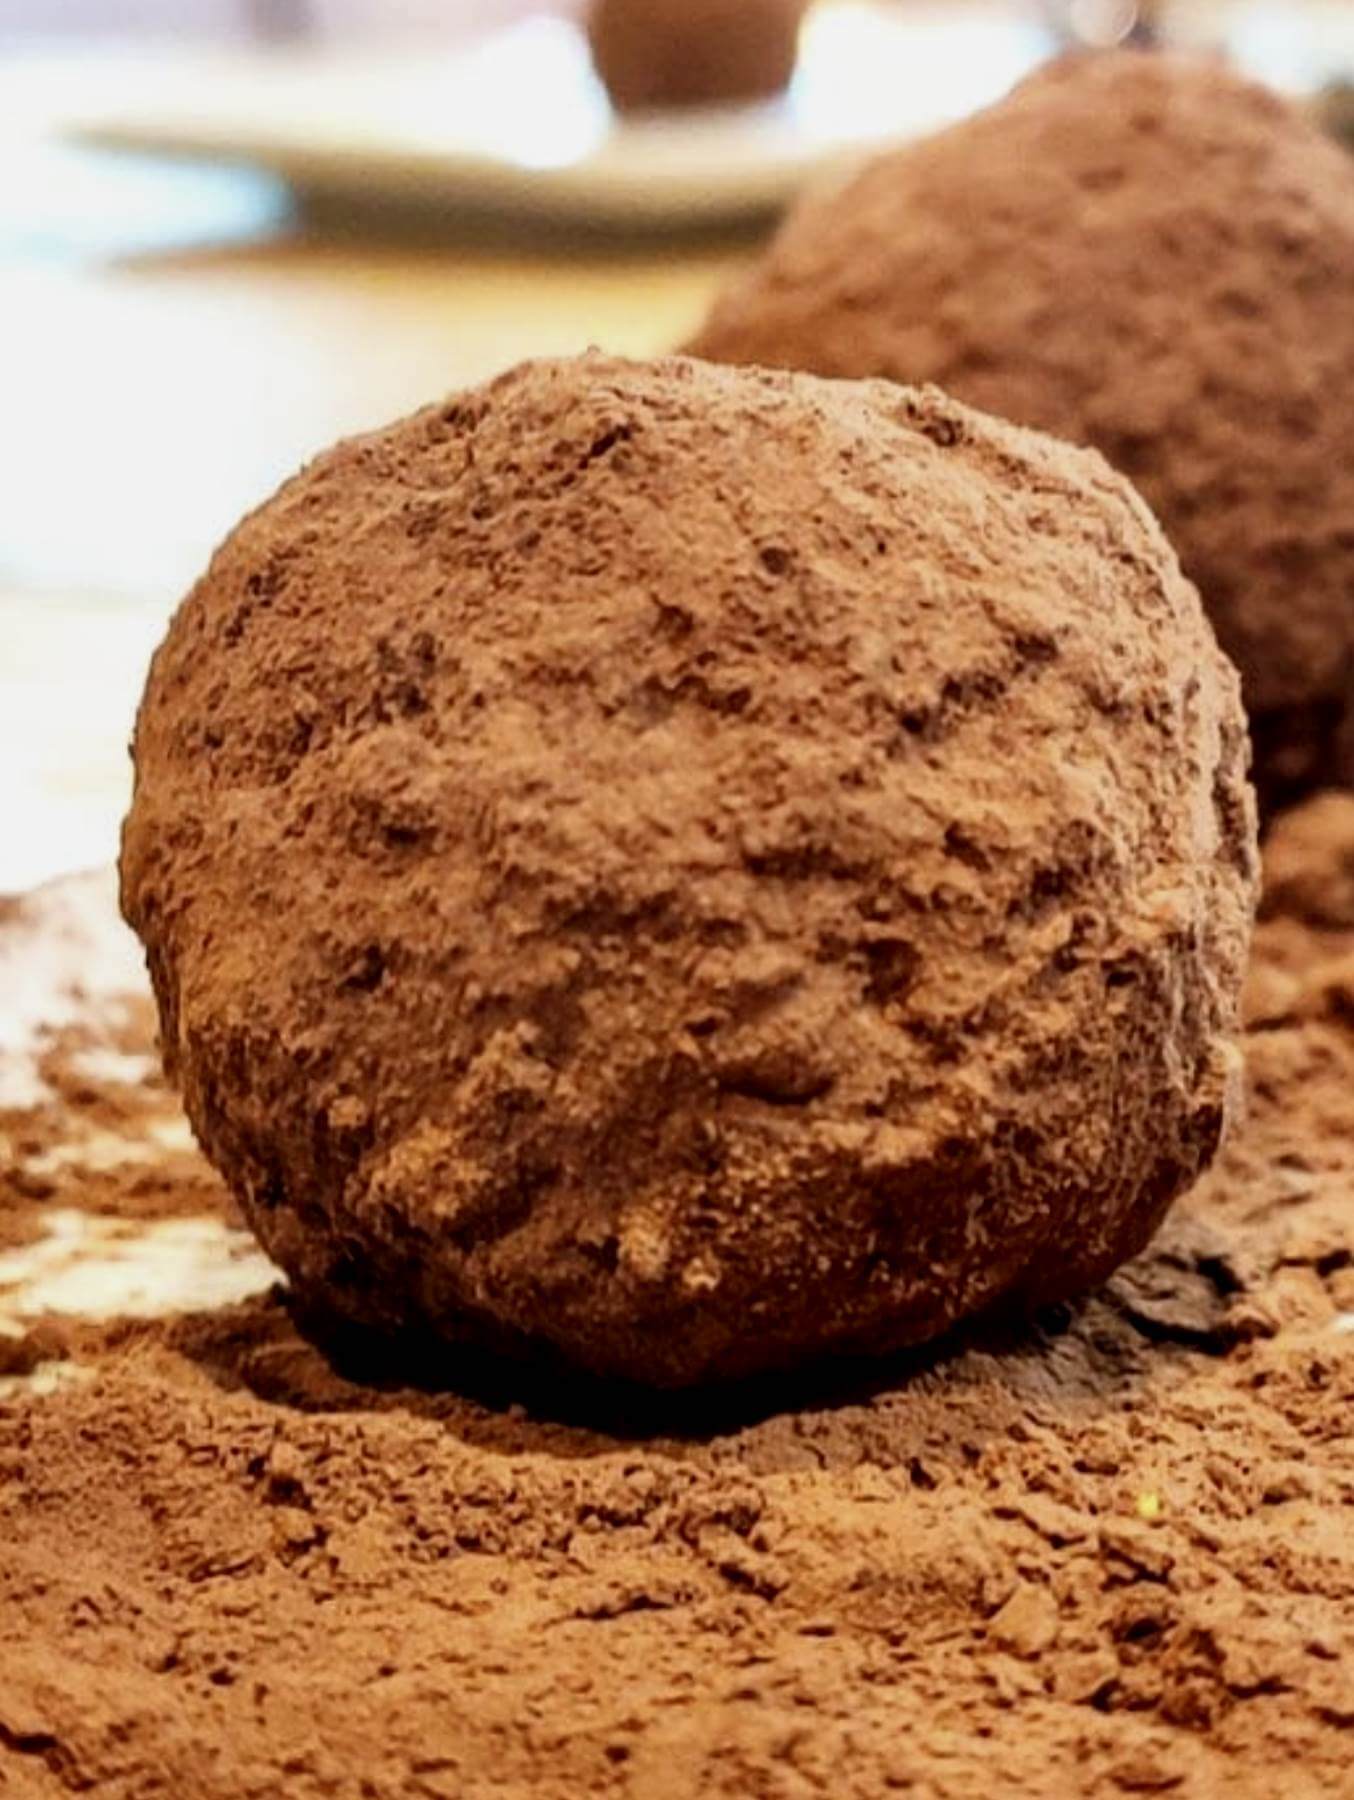 chocolate truffle workshop in brussels